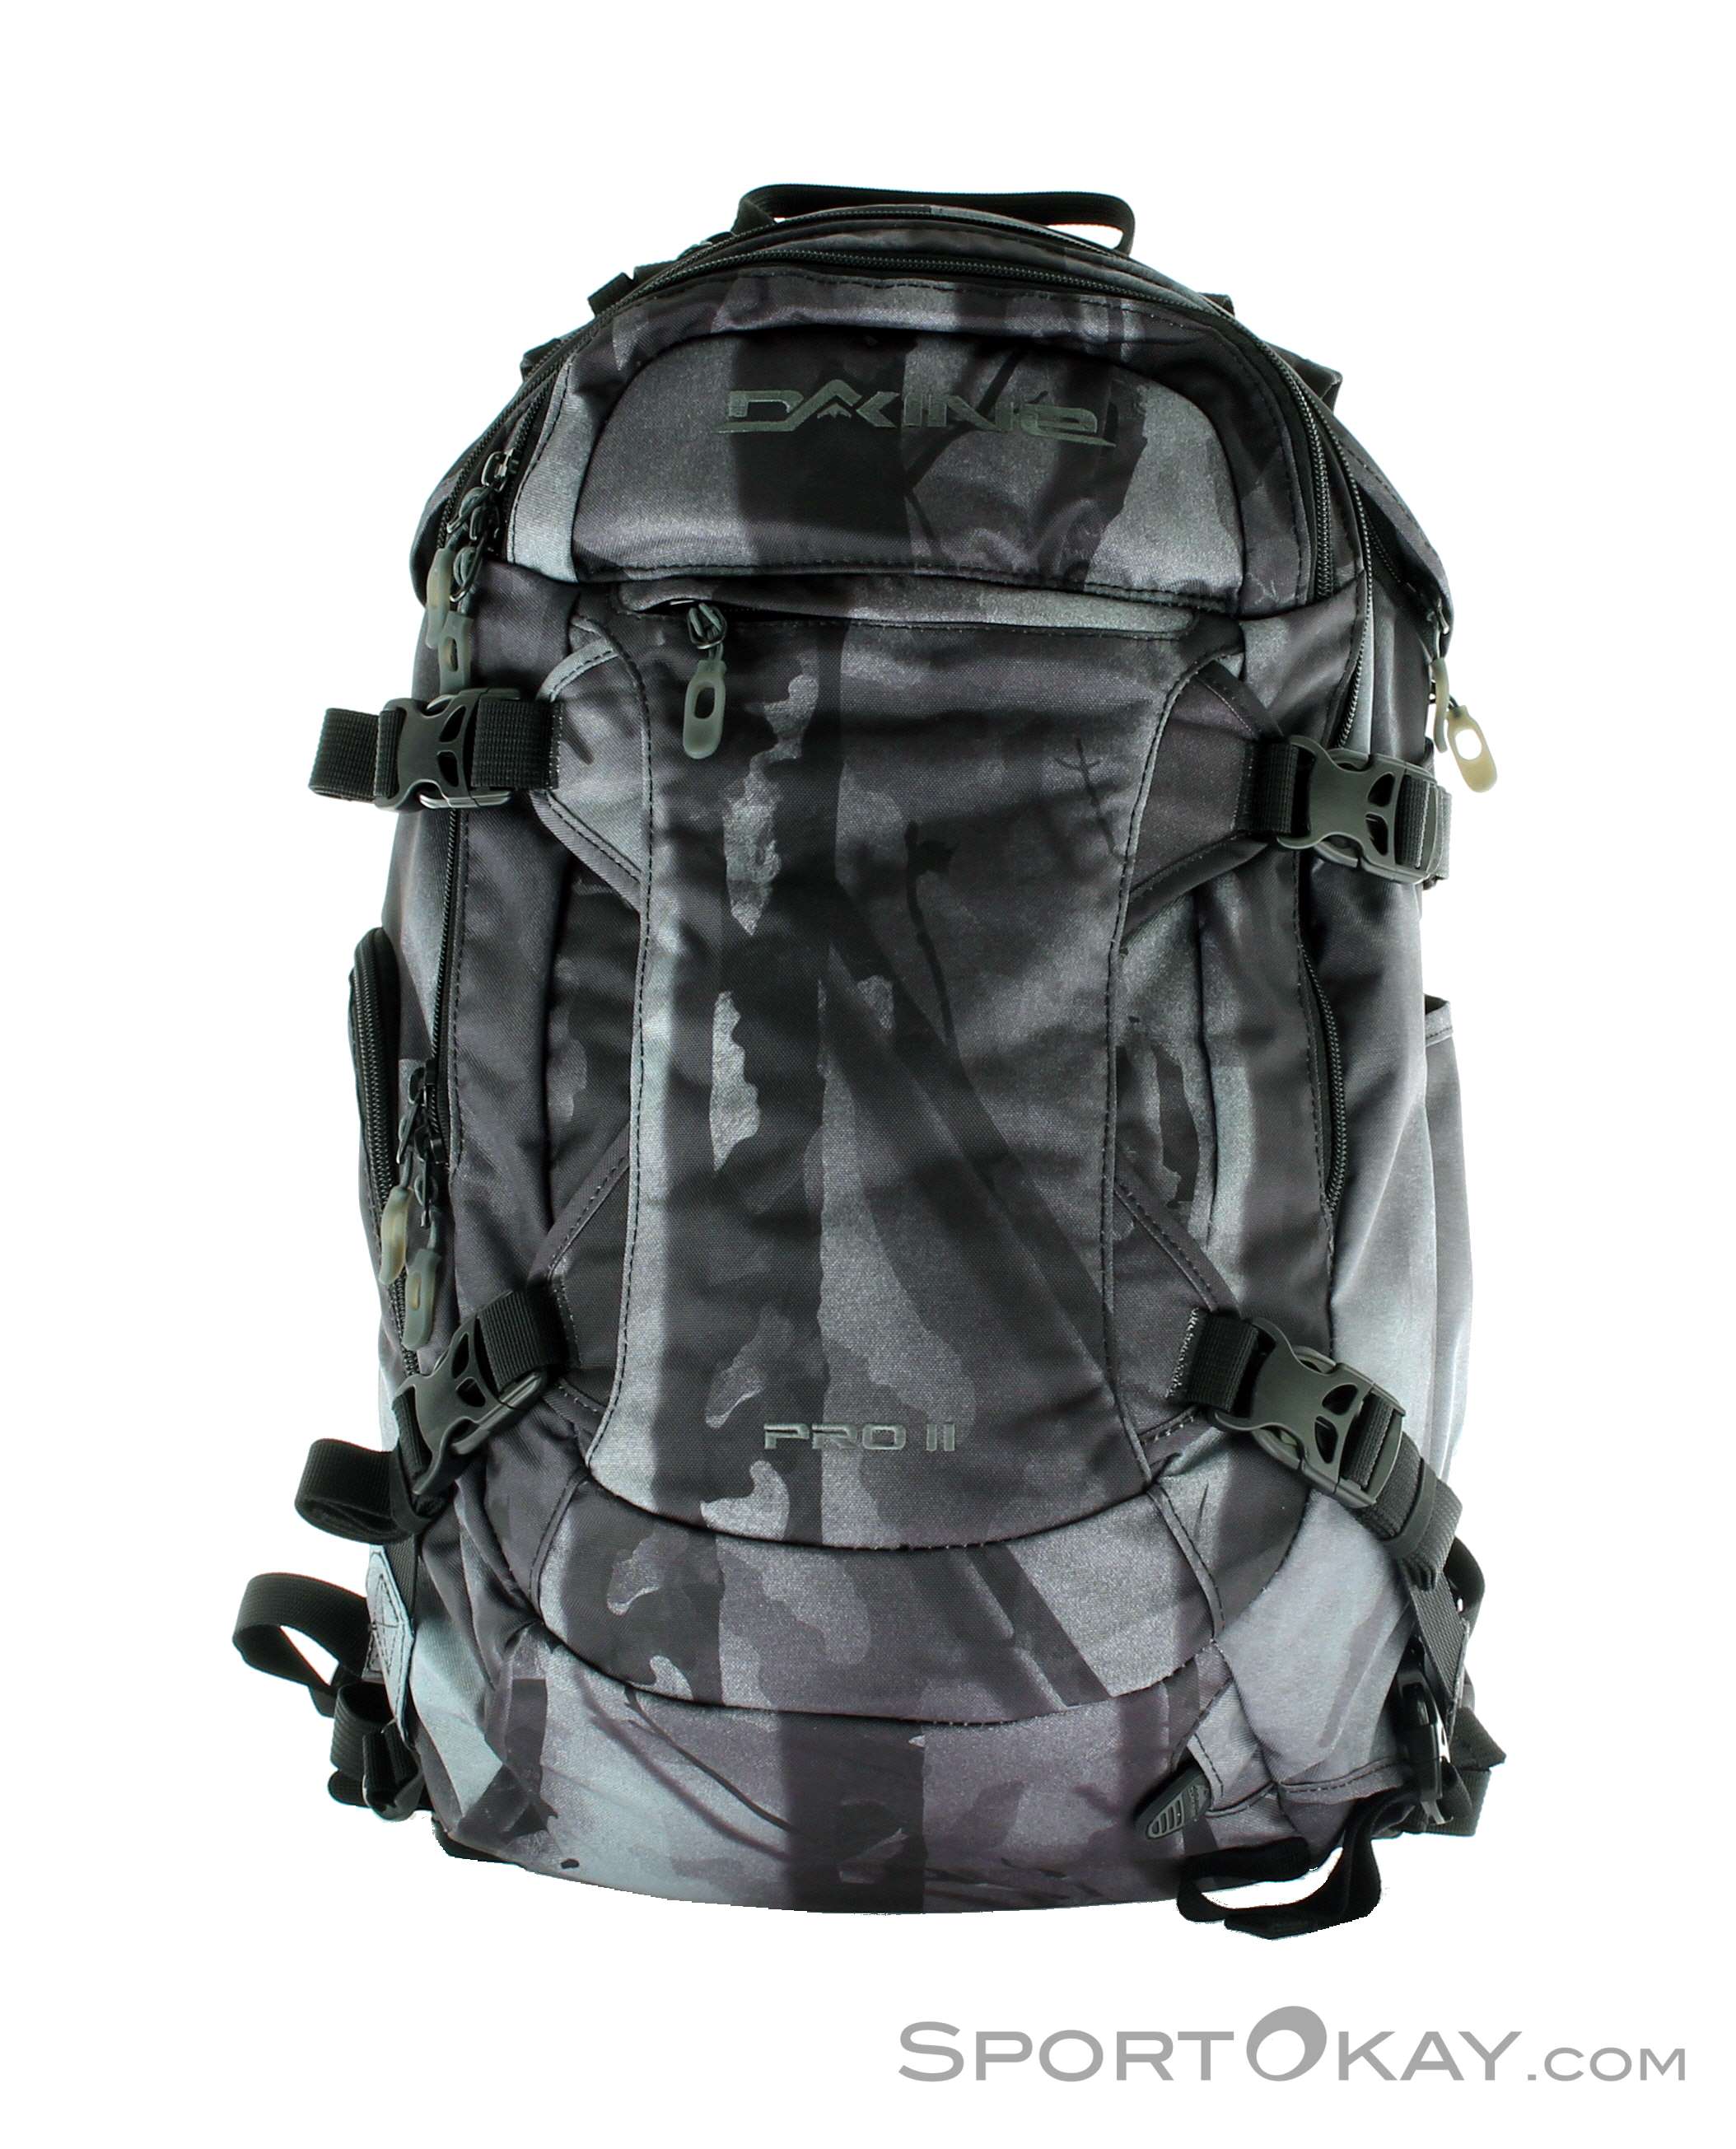 Dakine Pro 2 26l Backpack - Backpacks - Backpacks  Headlamps - Outdoor -  All